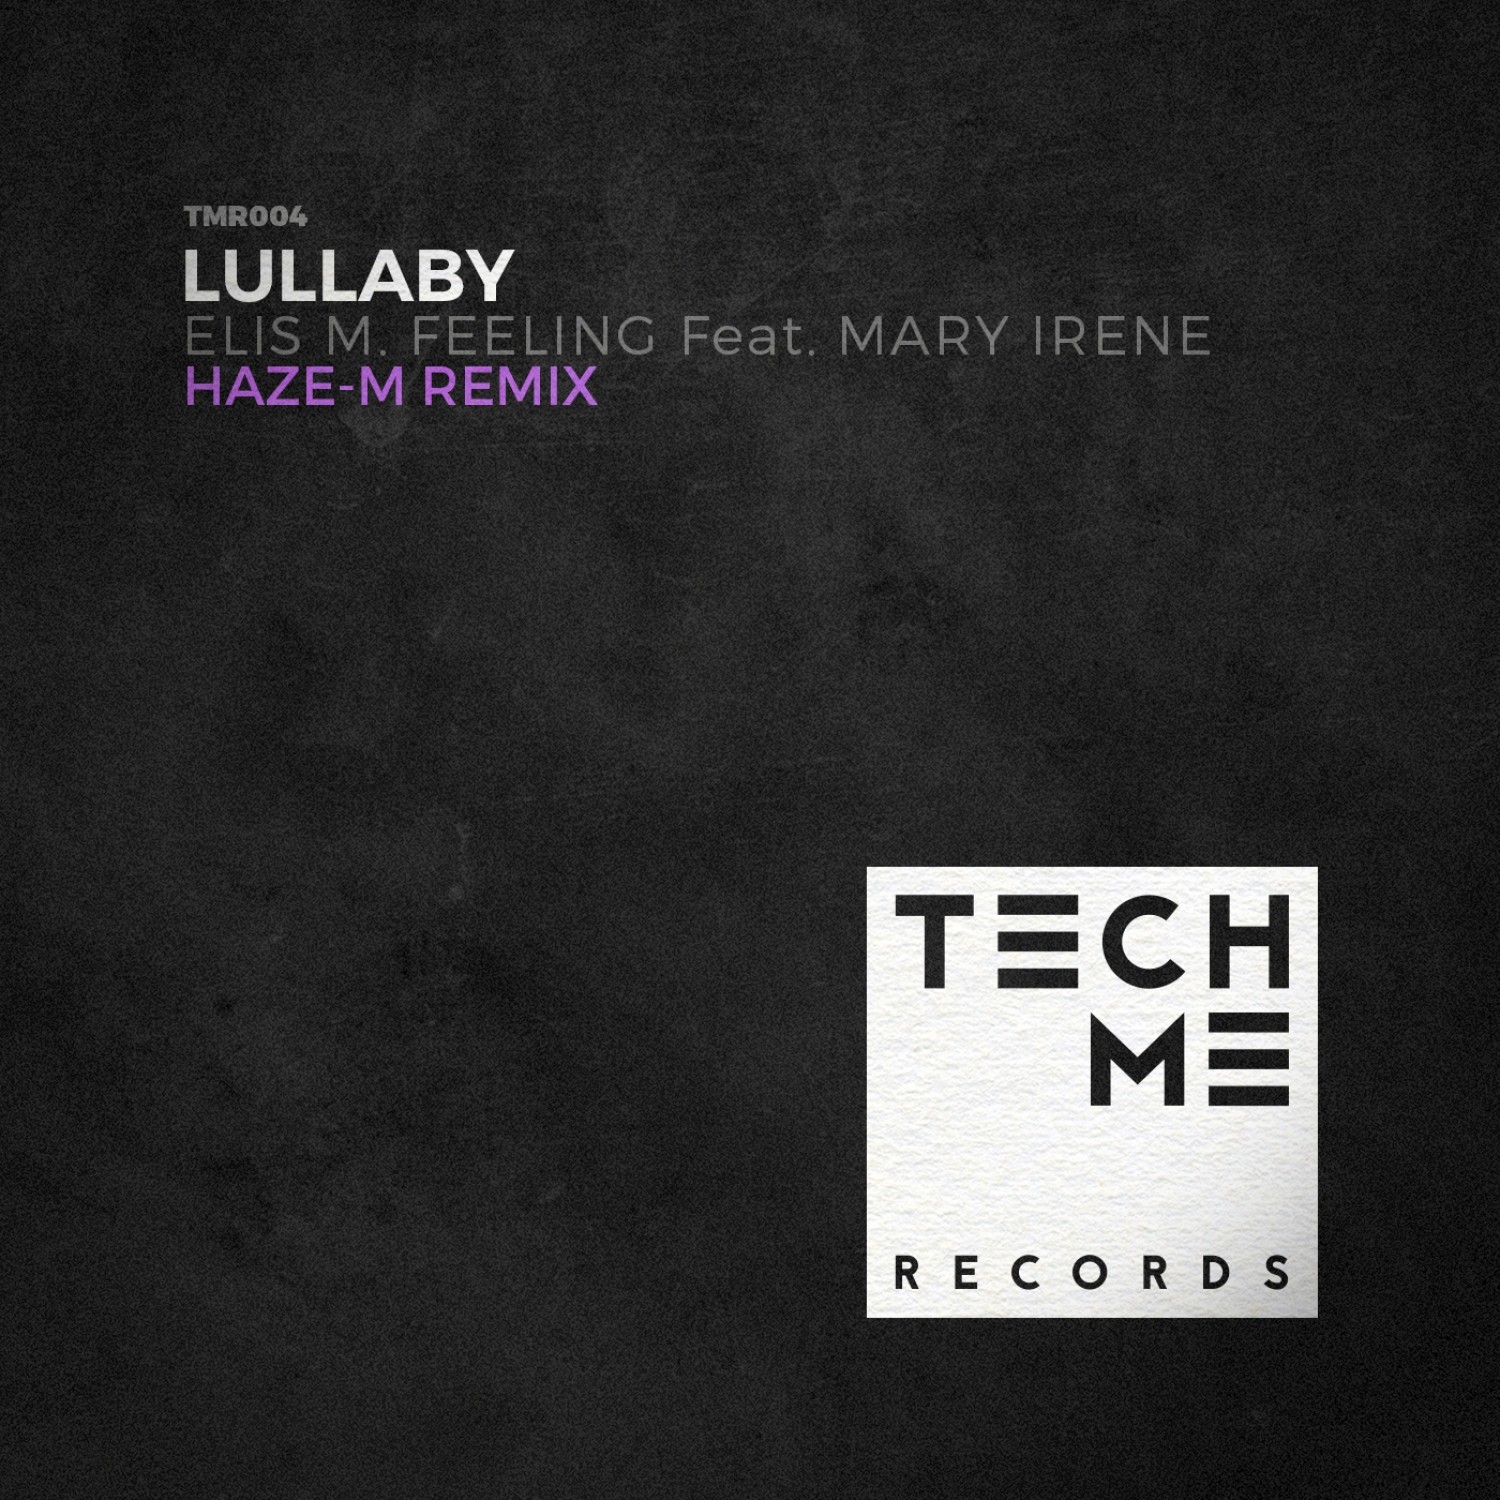 Lullaby (Haze-M Remix)